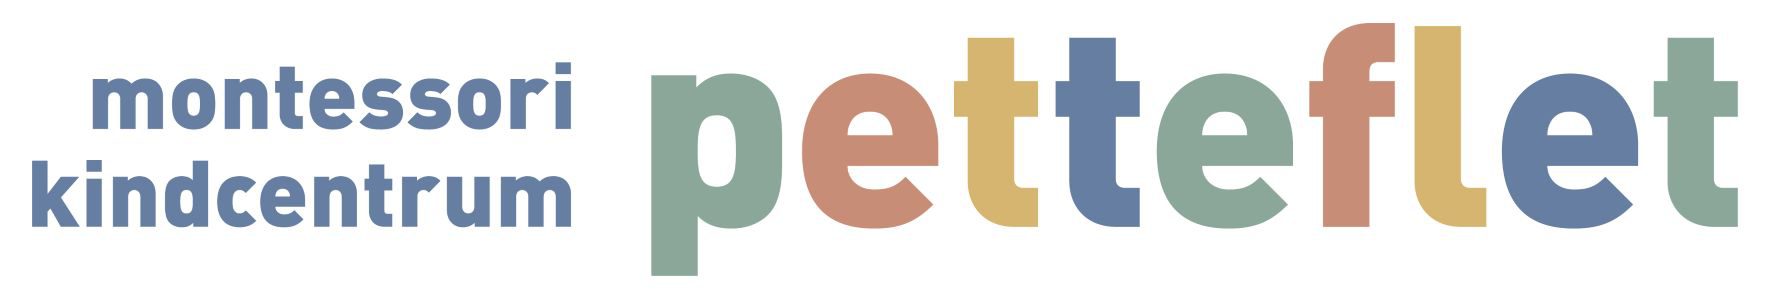 Montessori de Petteflet